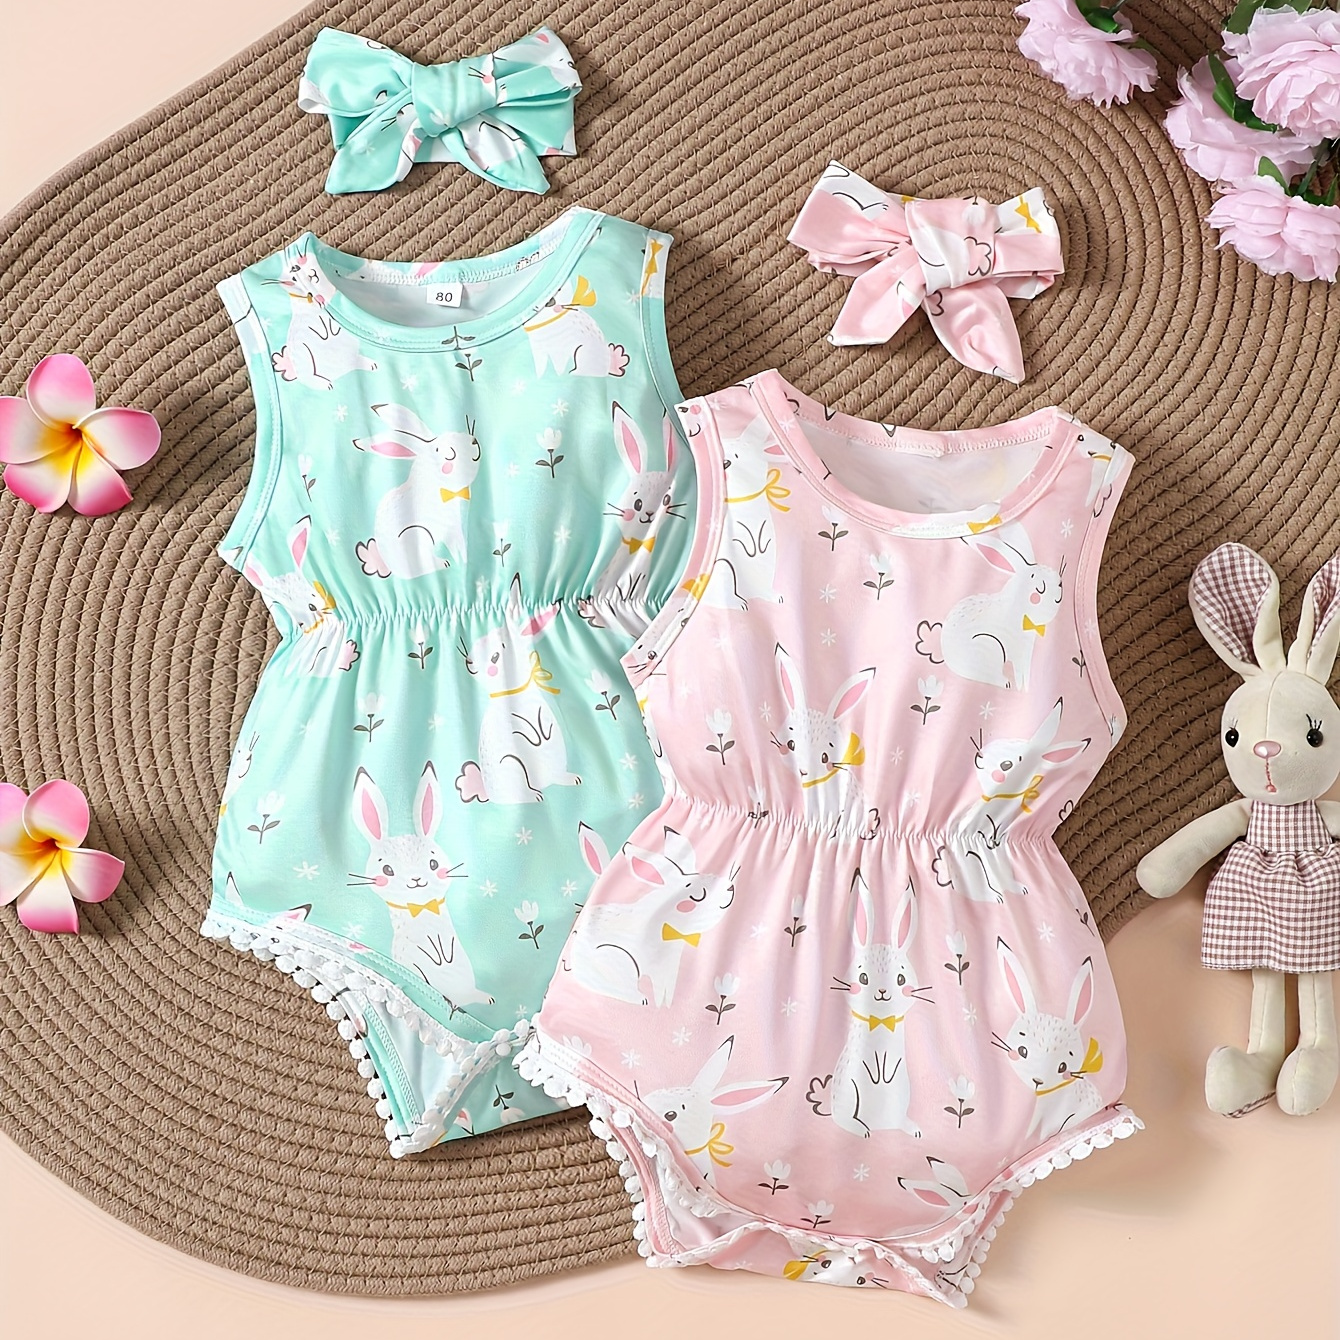 

2 Sets Baby's Cartoon Bunny Pattern Triangle Bodysuit, Pom-pom Trim Casual Sleeveless Romper, Toddler & Infant Girl's Onesie For Summer, As Gift